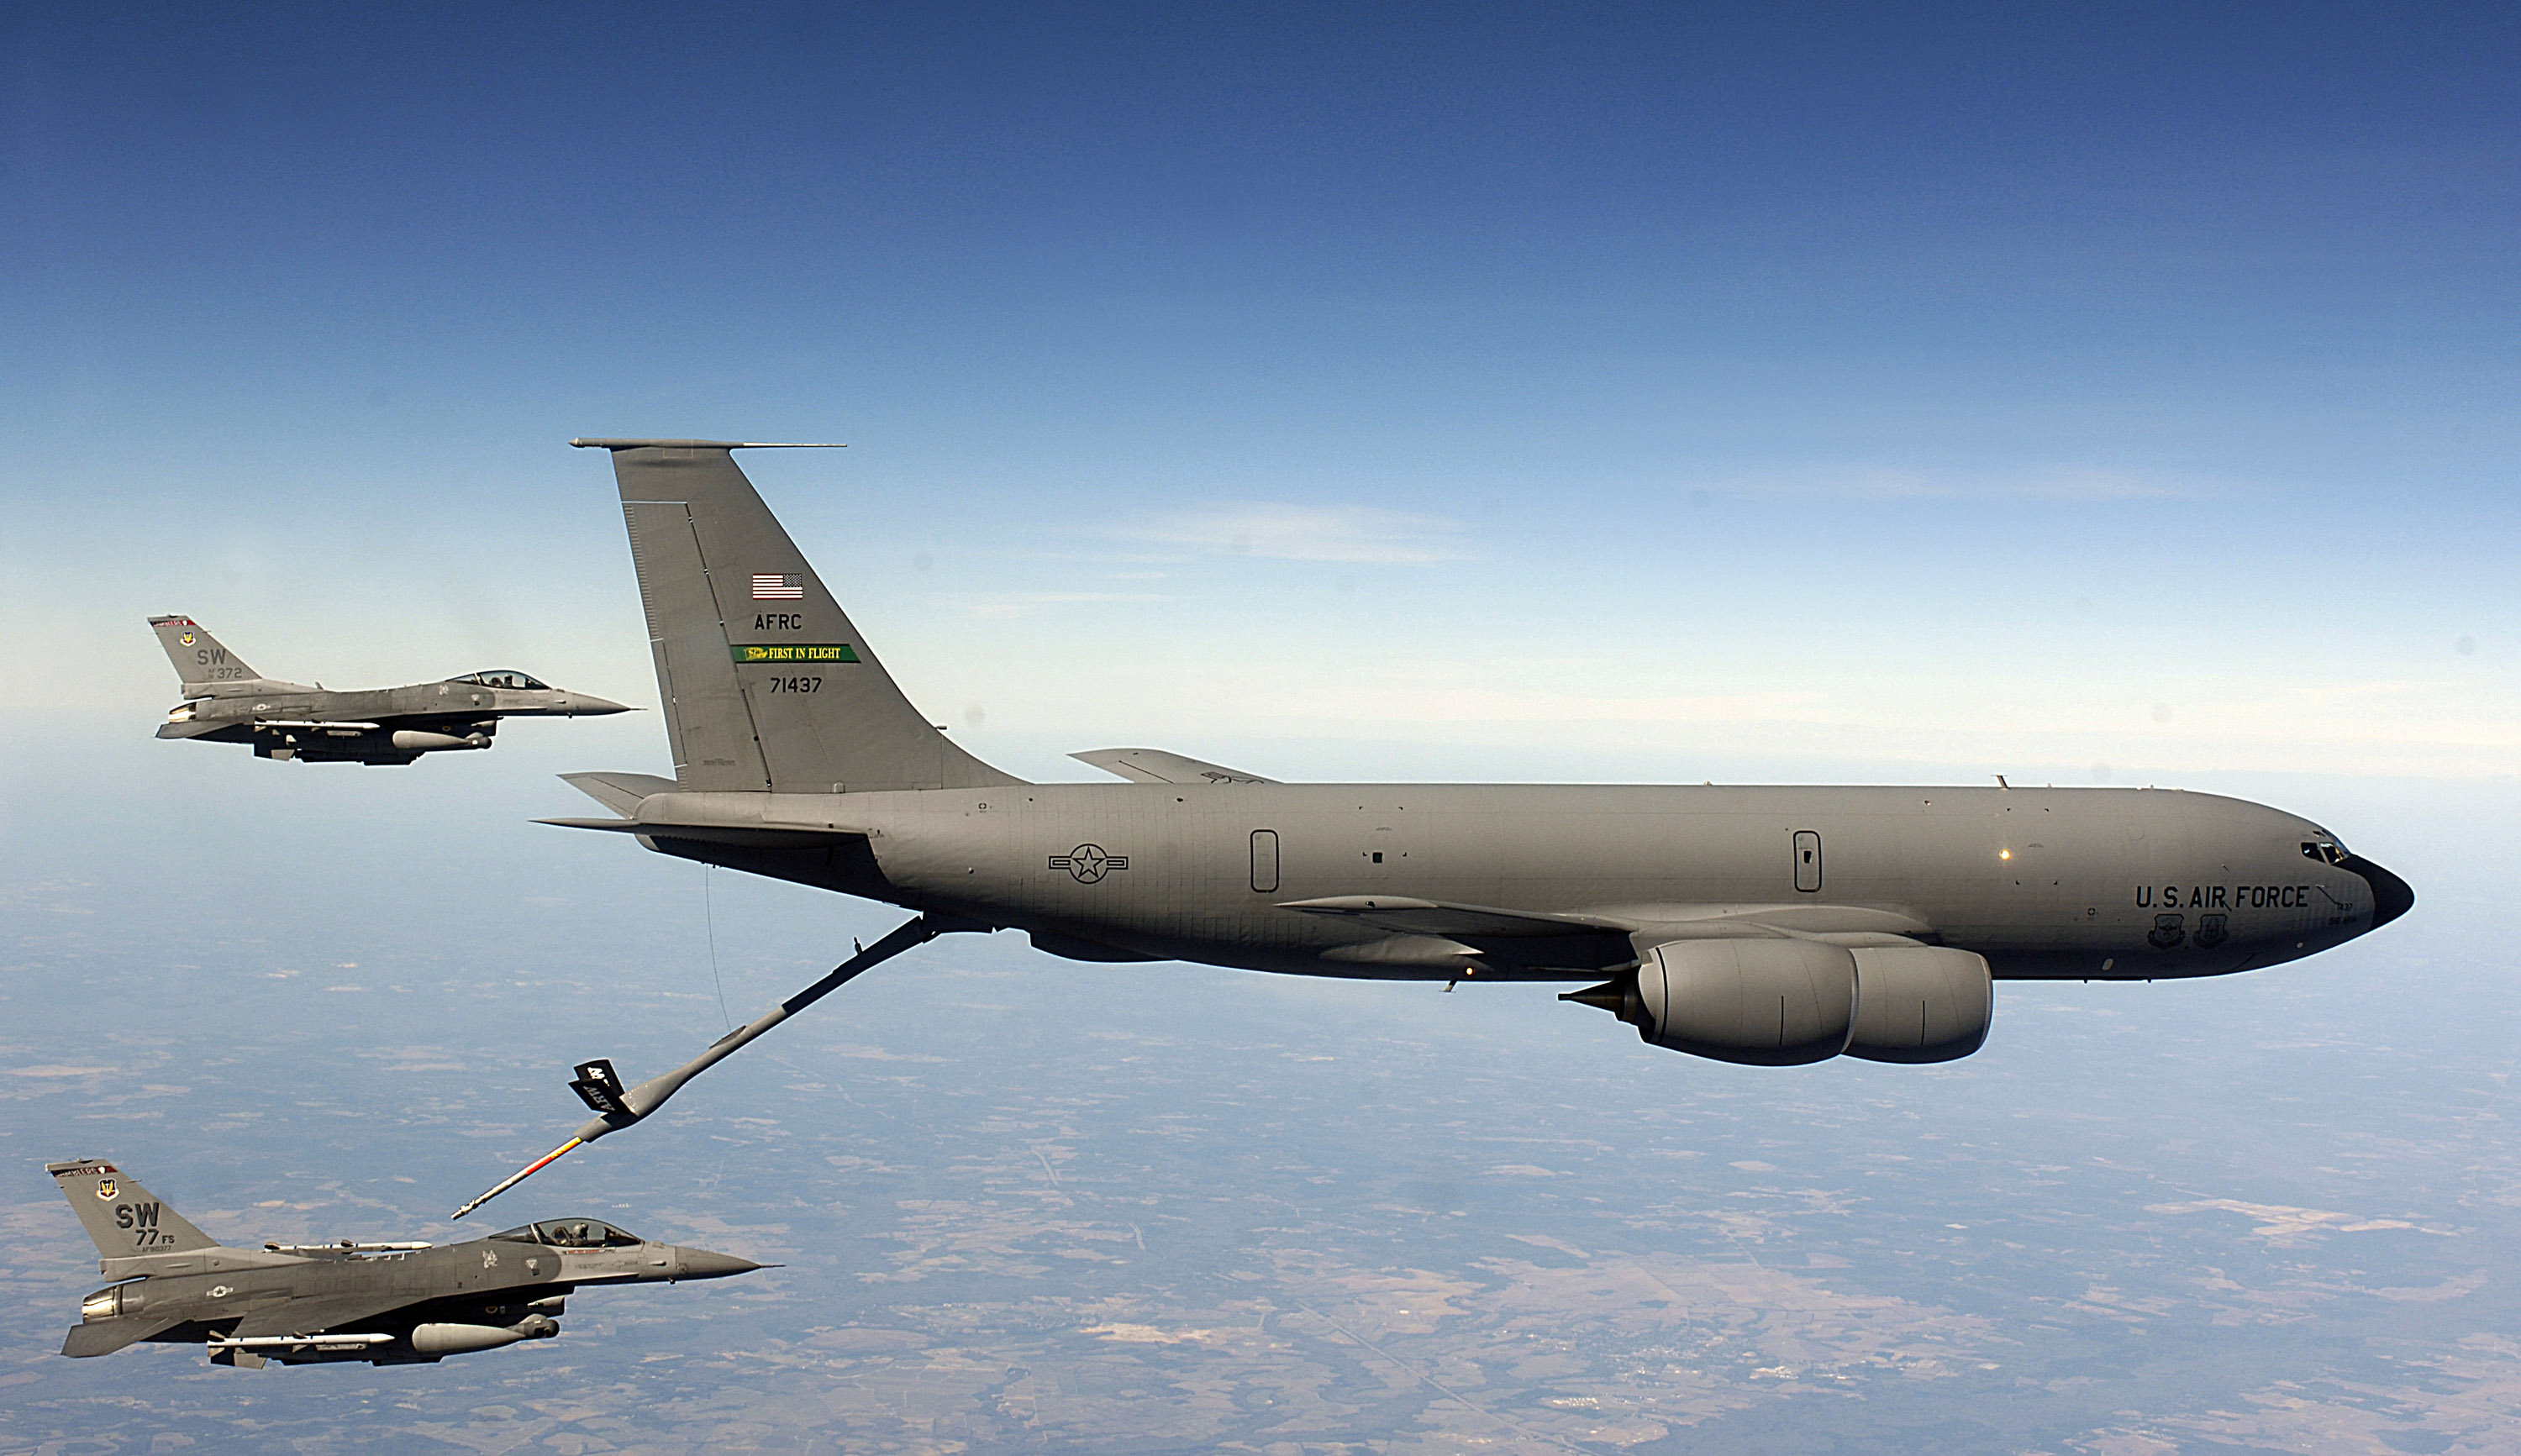 A photo of KC-135 Stratotanker